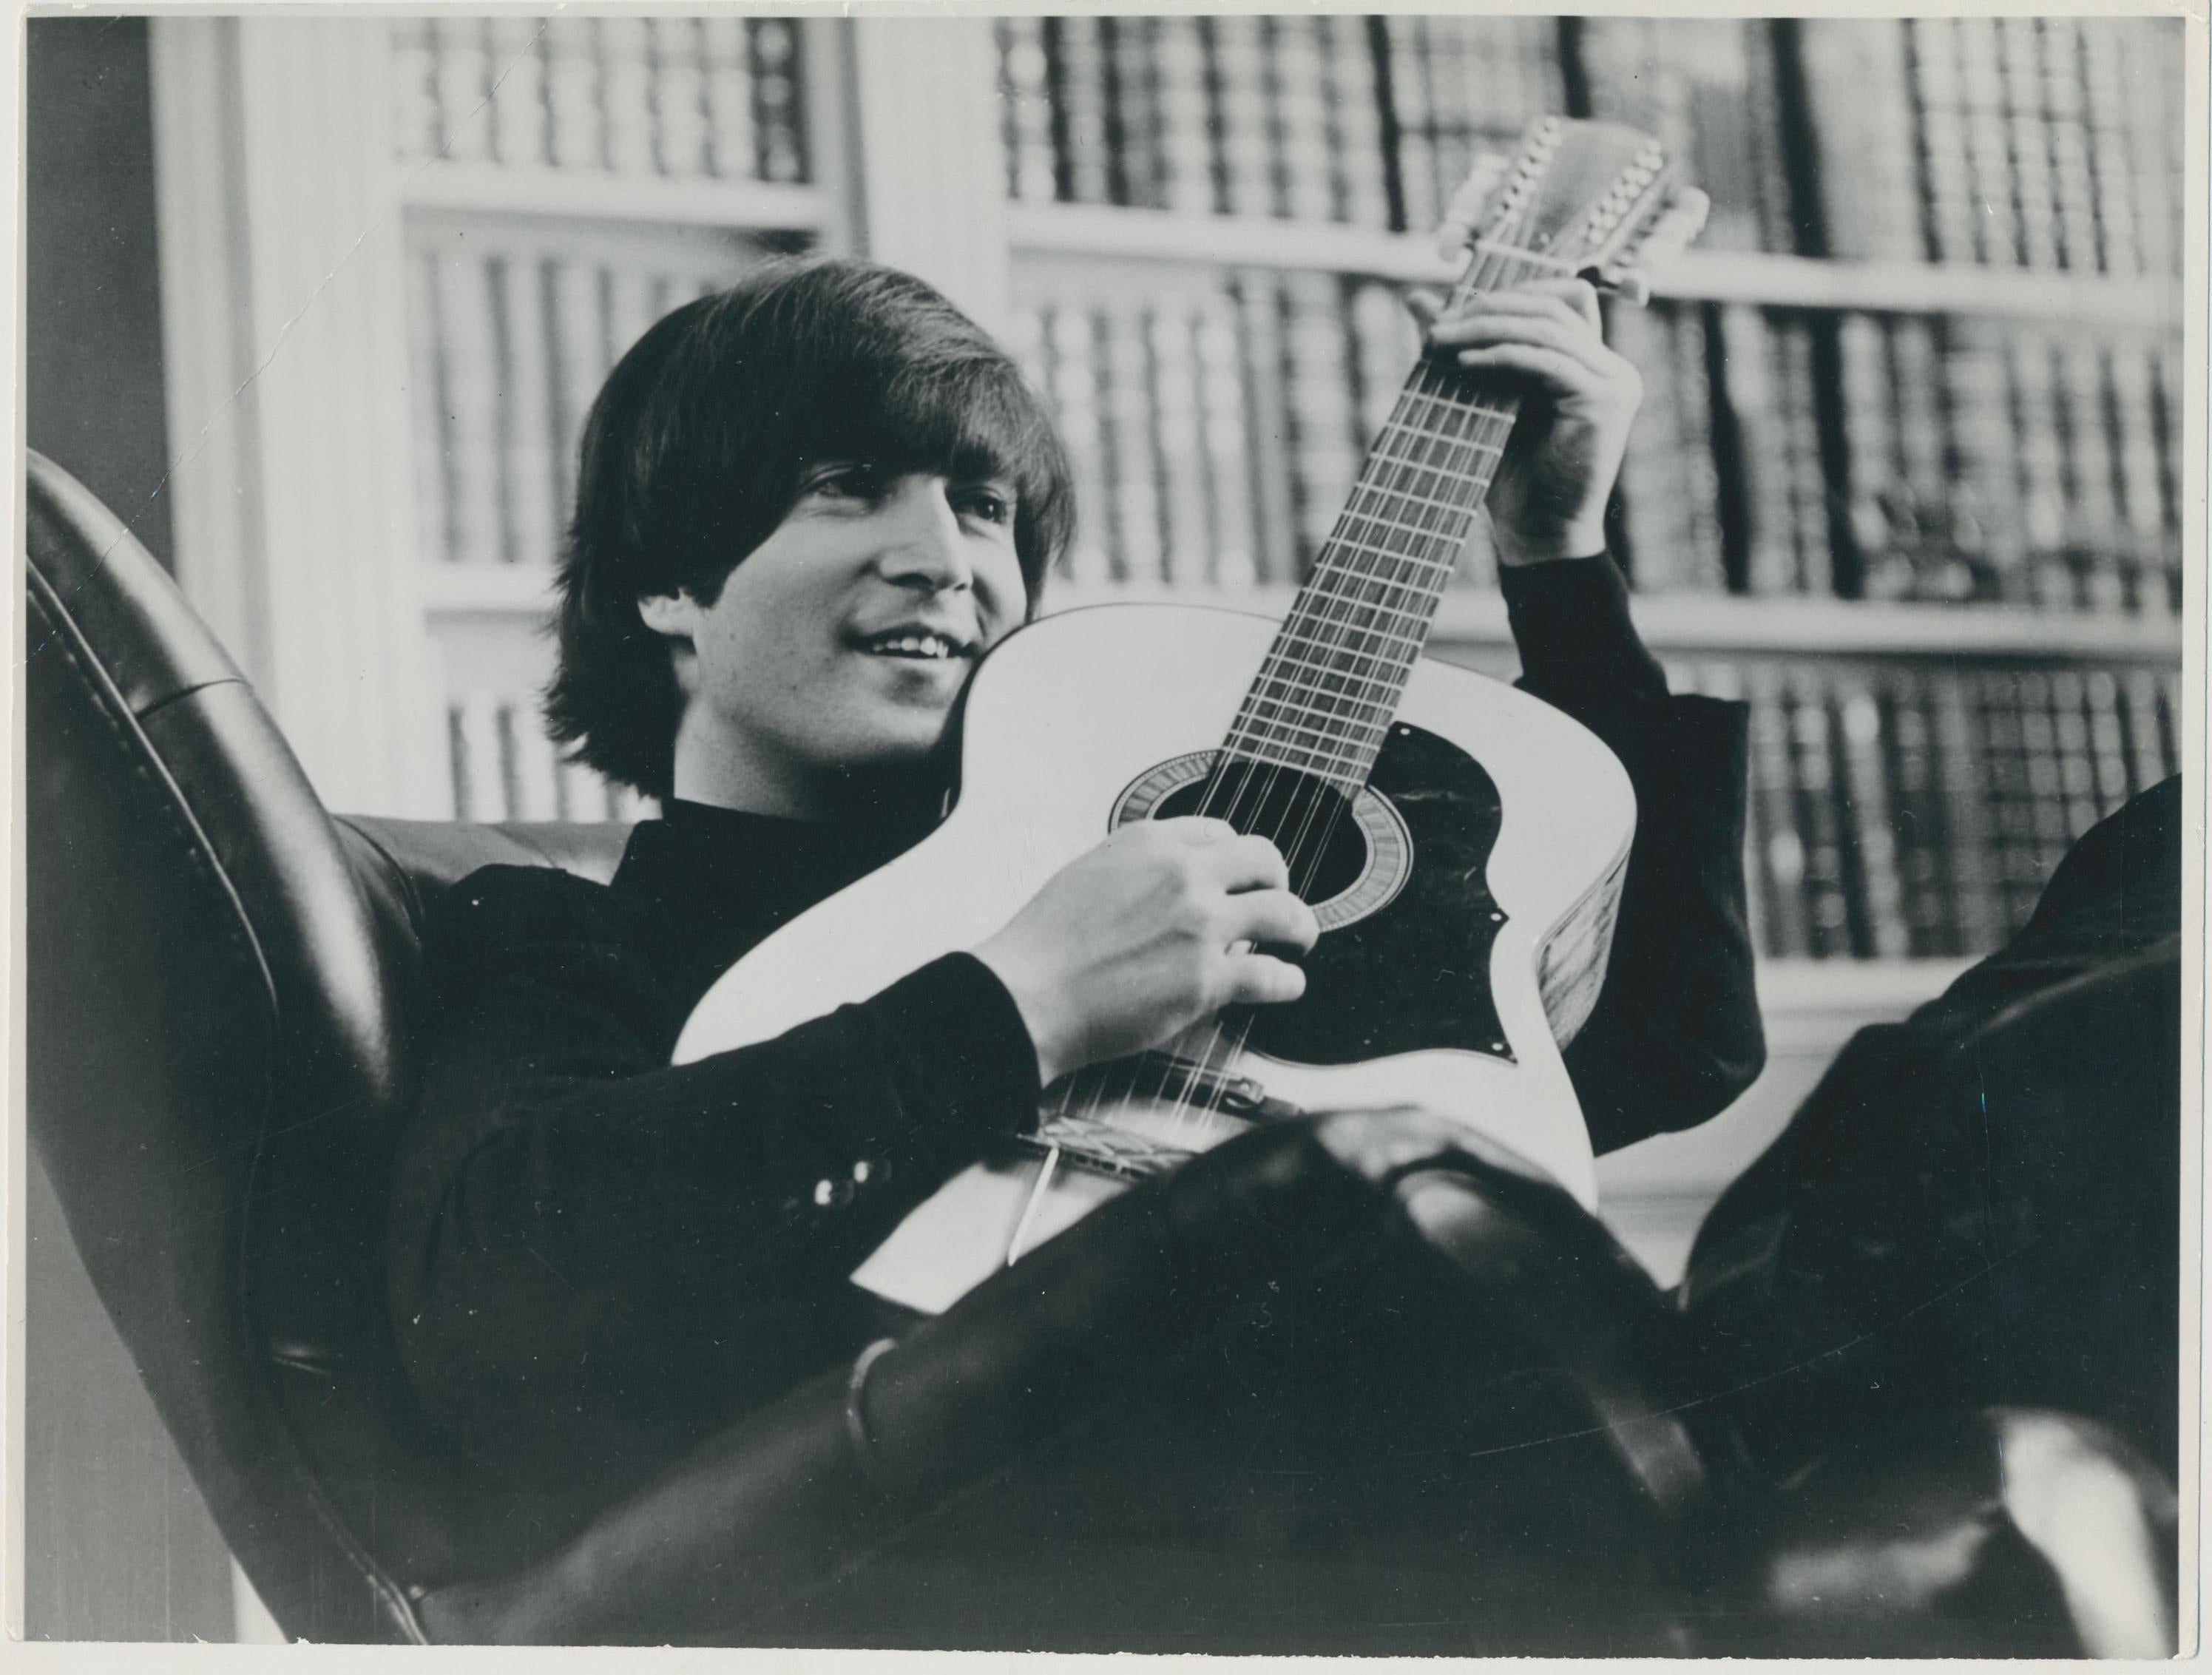 Unknown Portrait Photograph - John Lennon, Guitar, Black and White Photography, 1970s, 18, 9 x 25, 1 cm